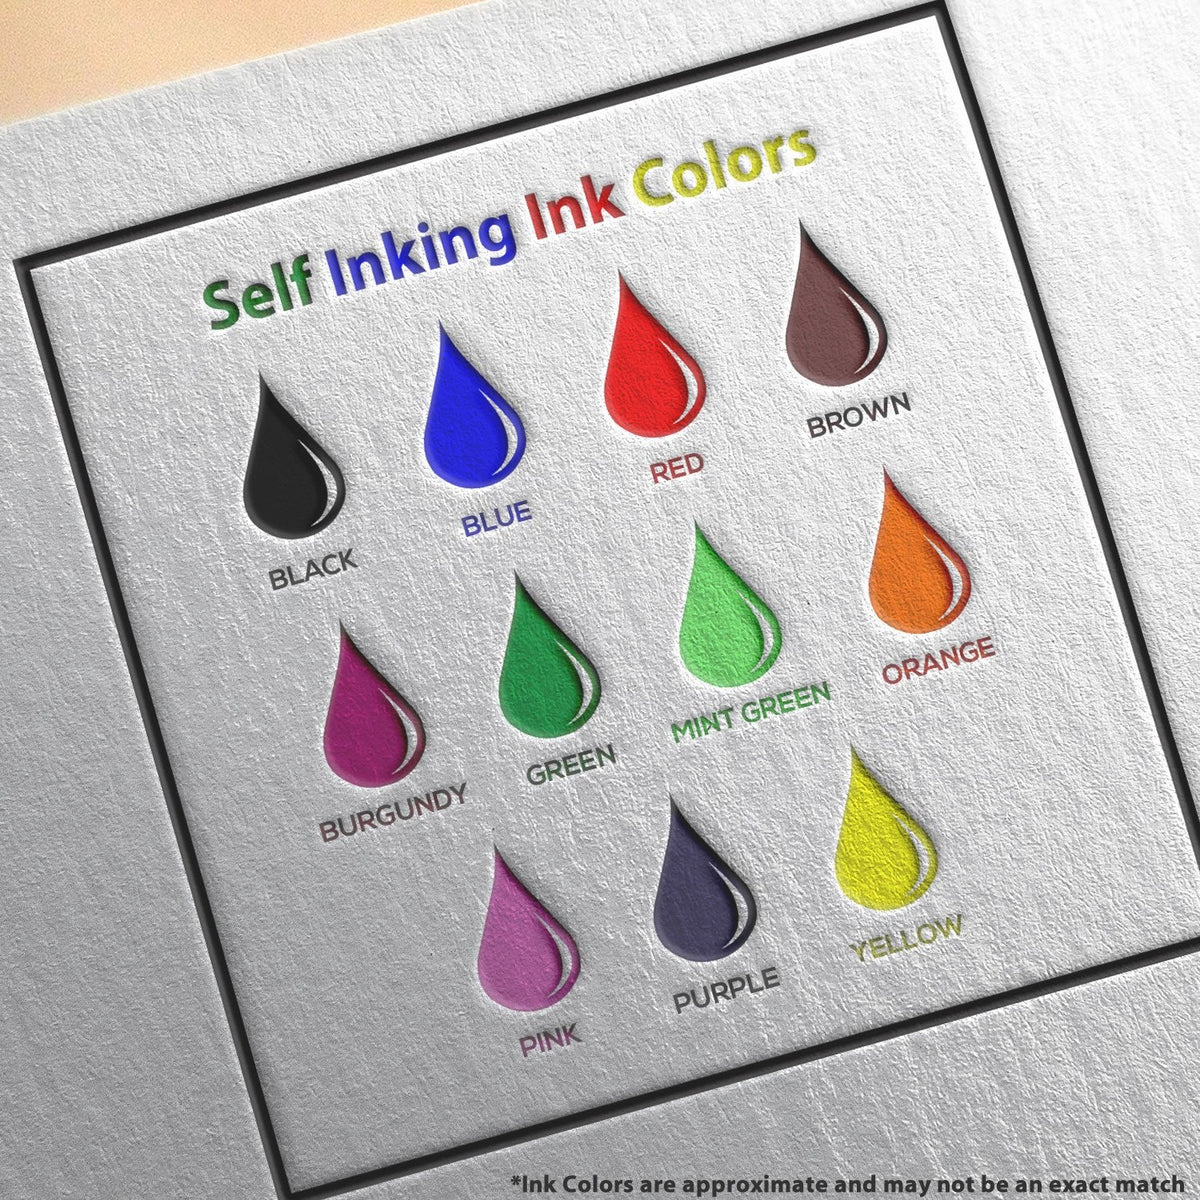 Self Inking Make Up Work Stamp Ink Color Options